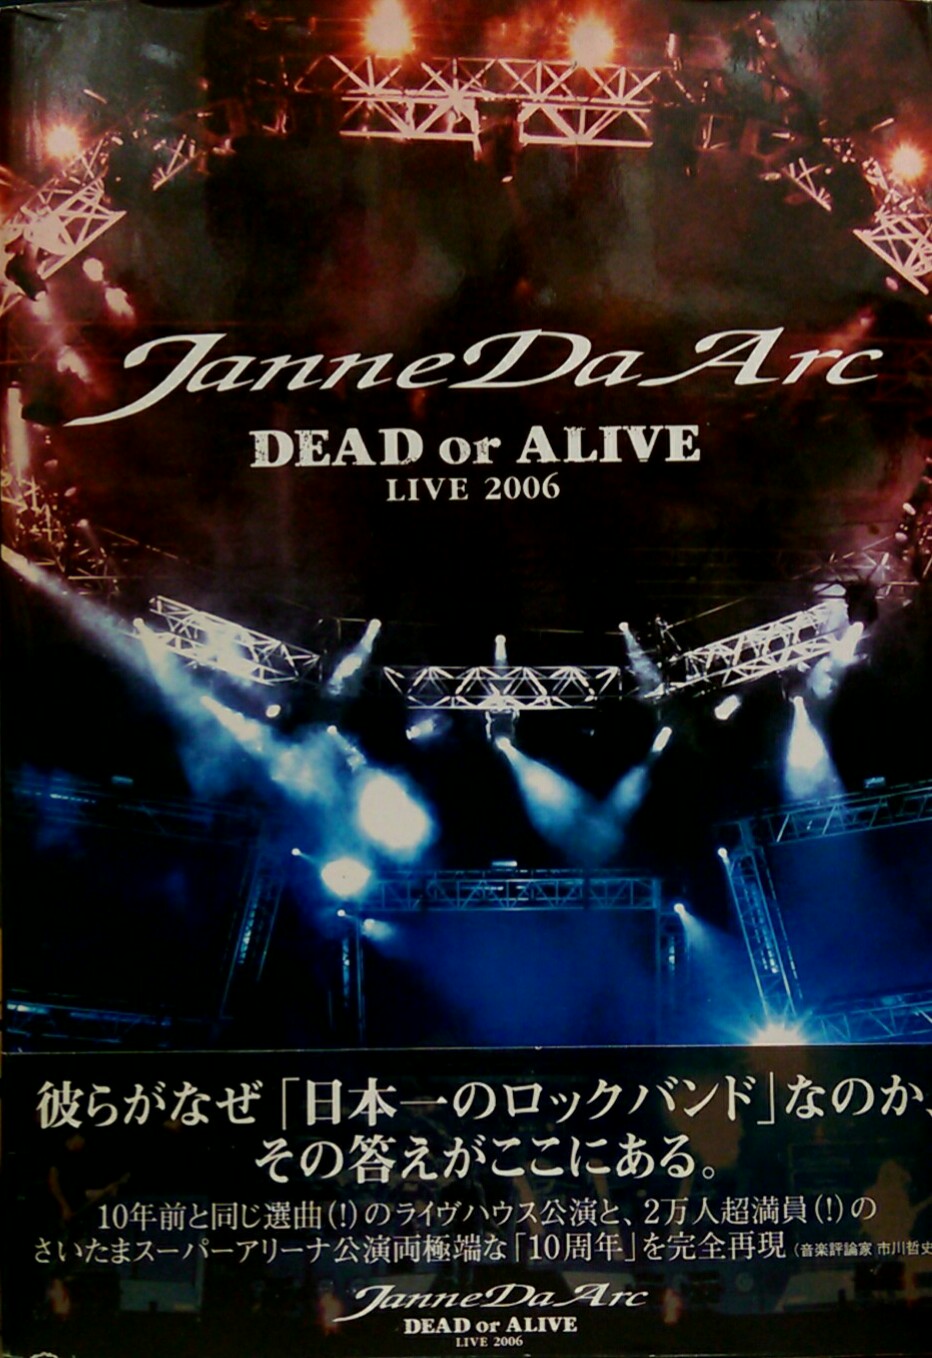 Janne Da Arc dead or alive live 2006